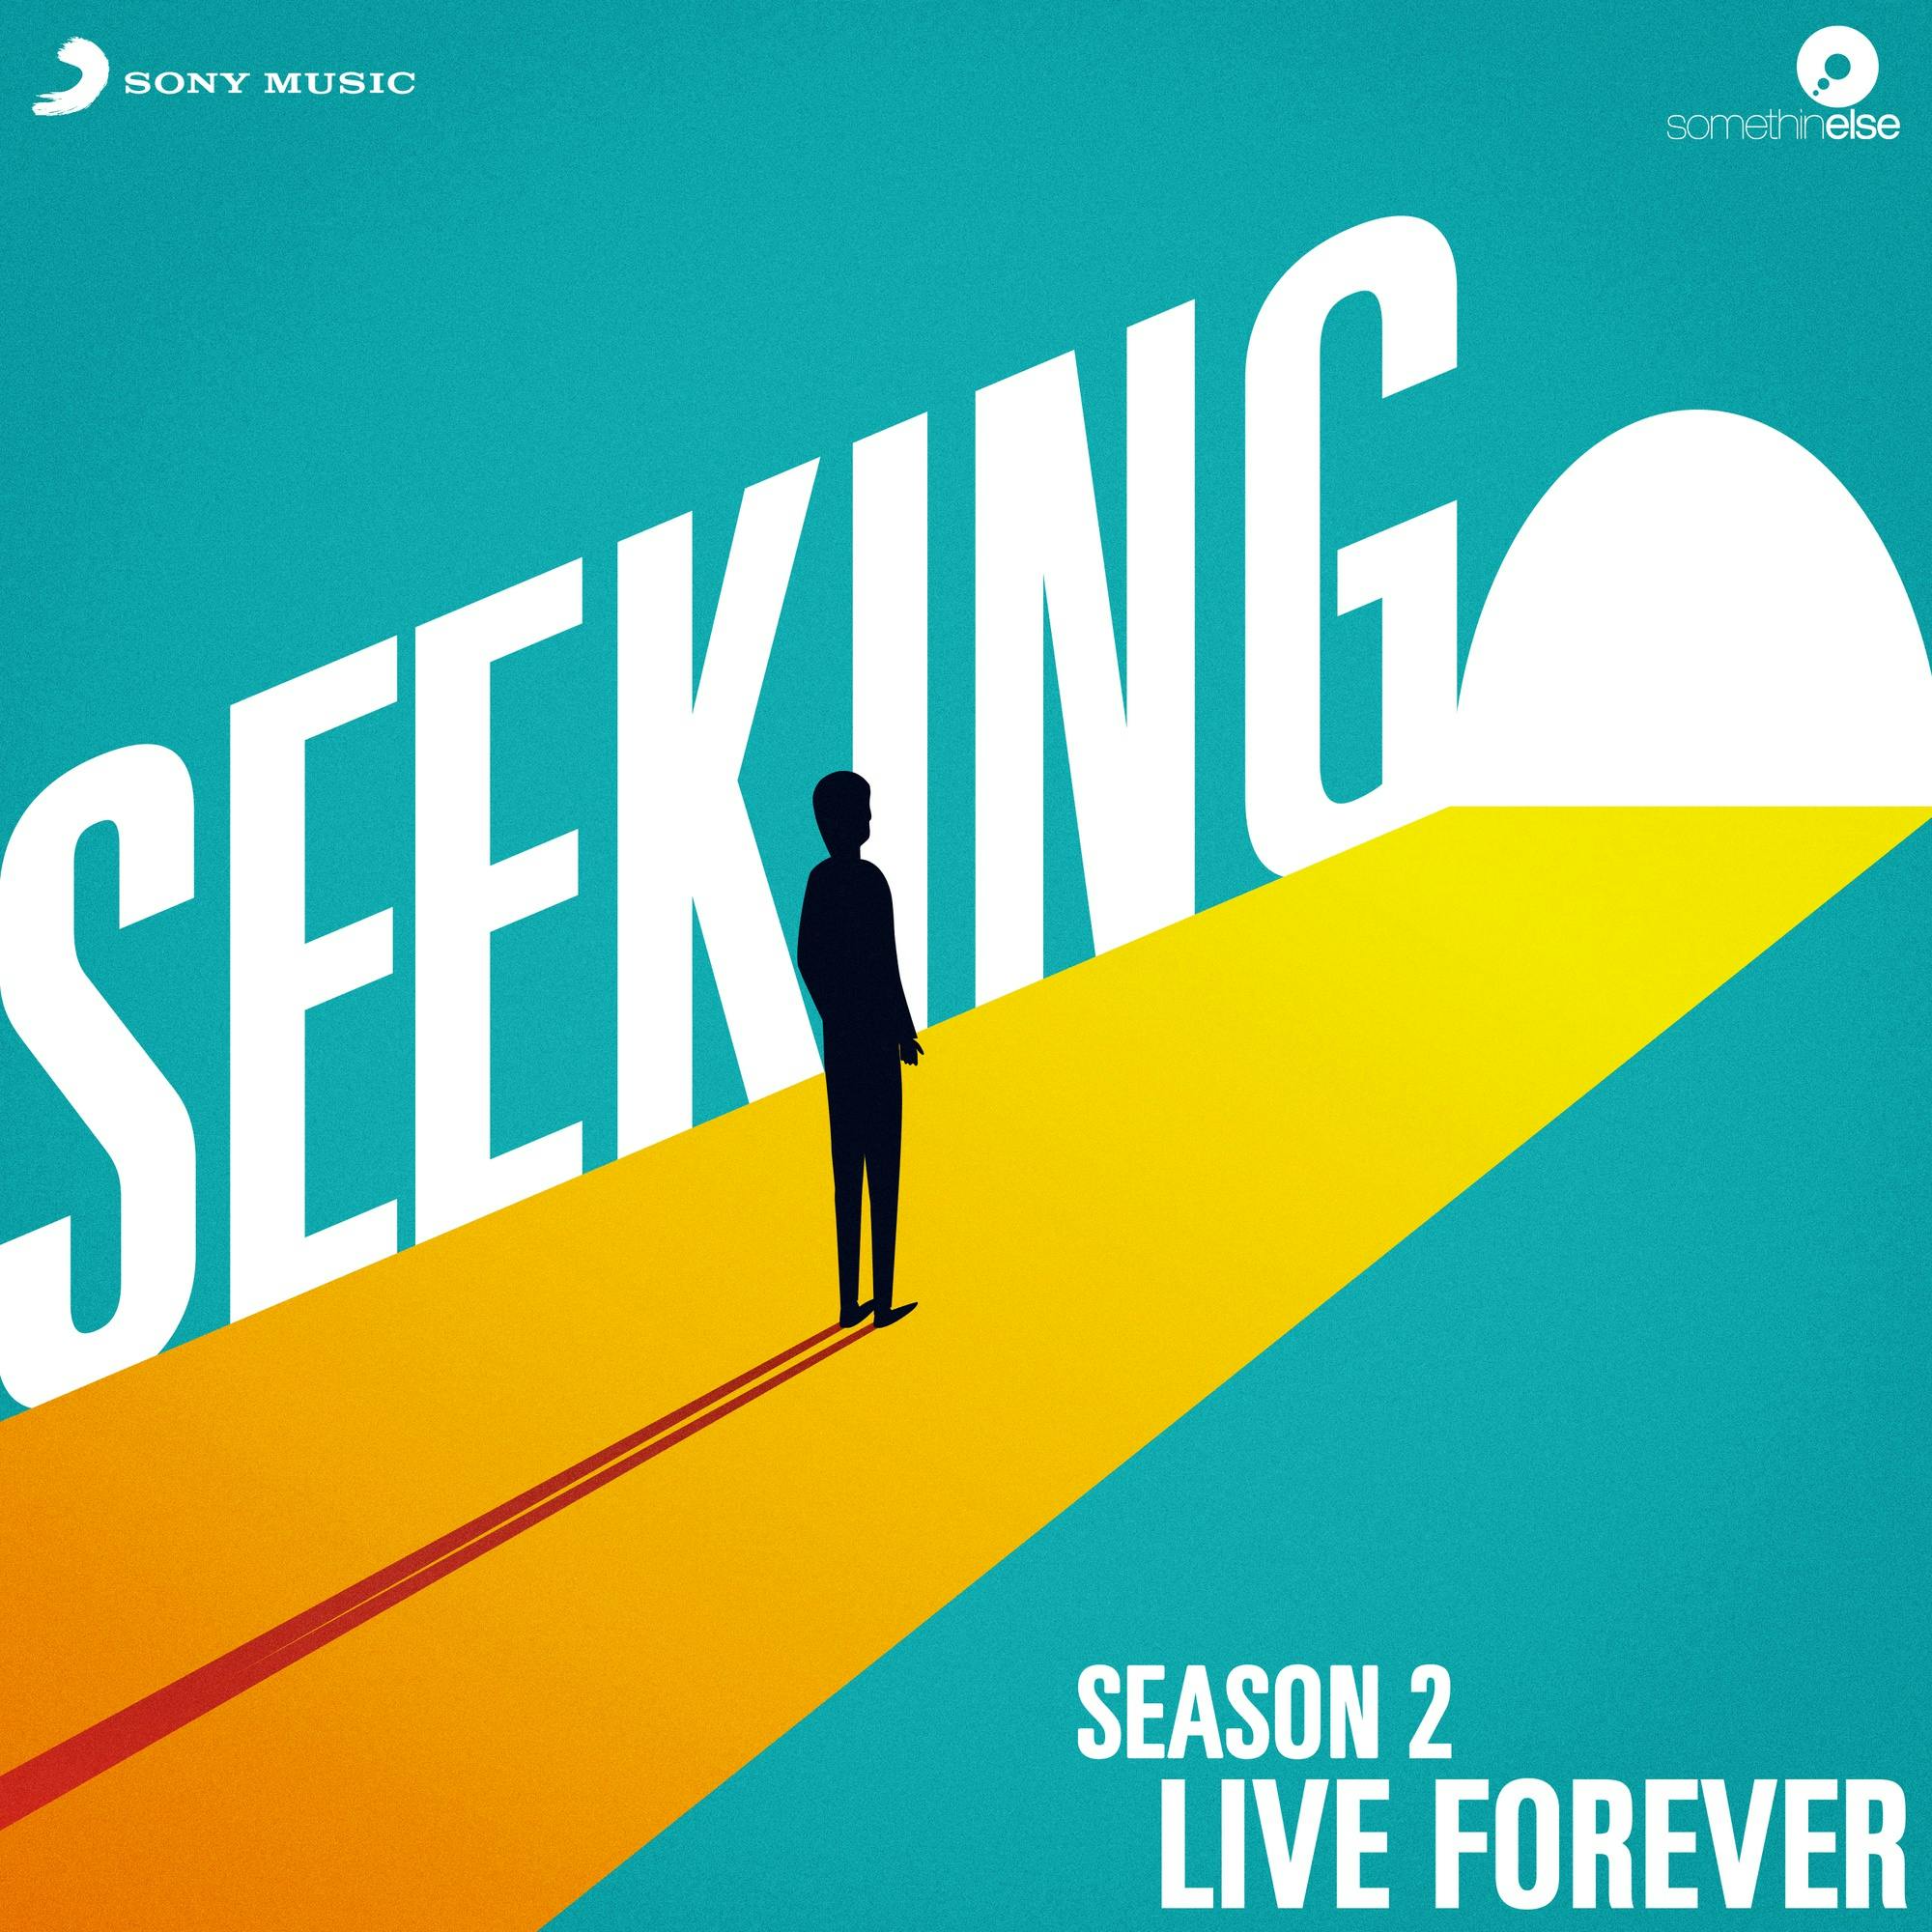 Introducing Seeking Season 2: Live Forever